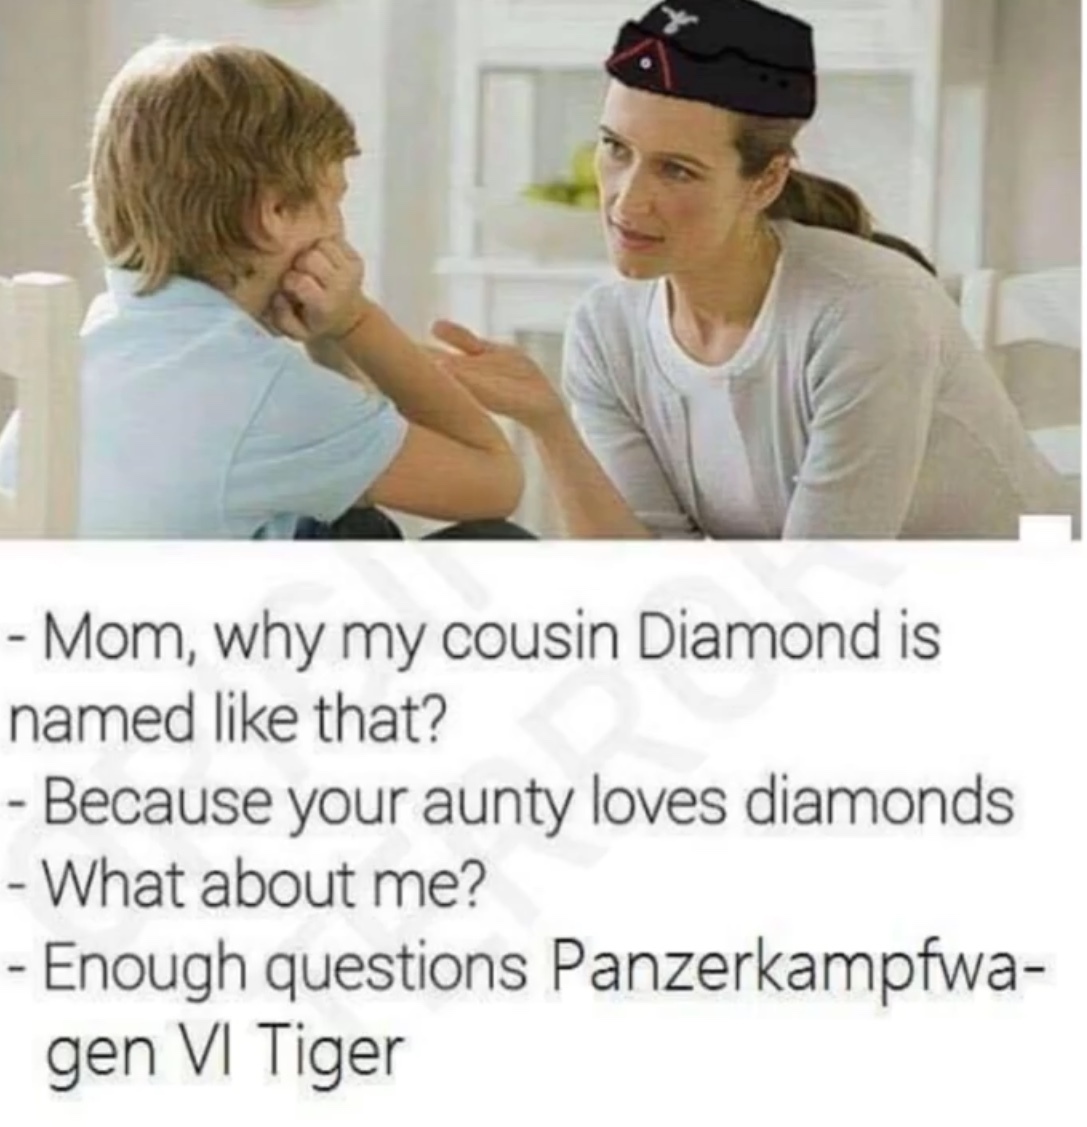 panzerkampfwagen V1 tiger - meme